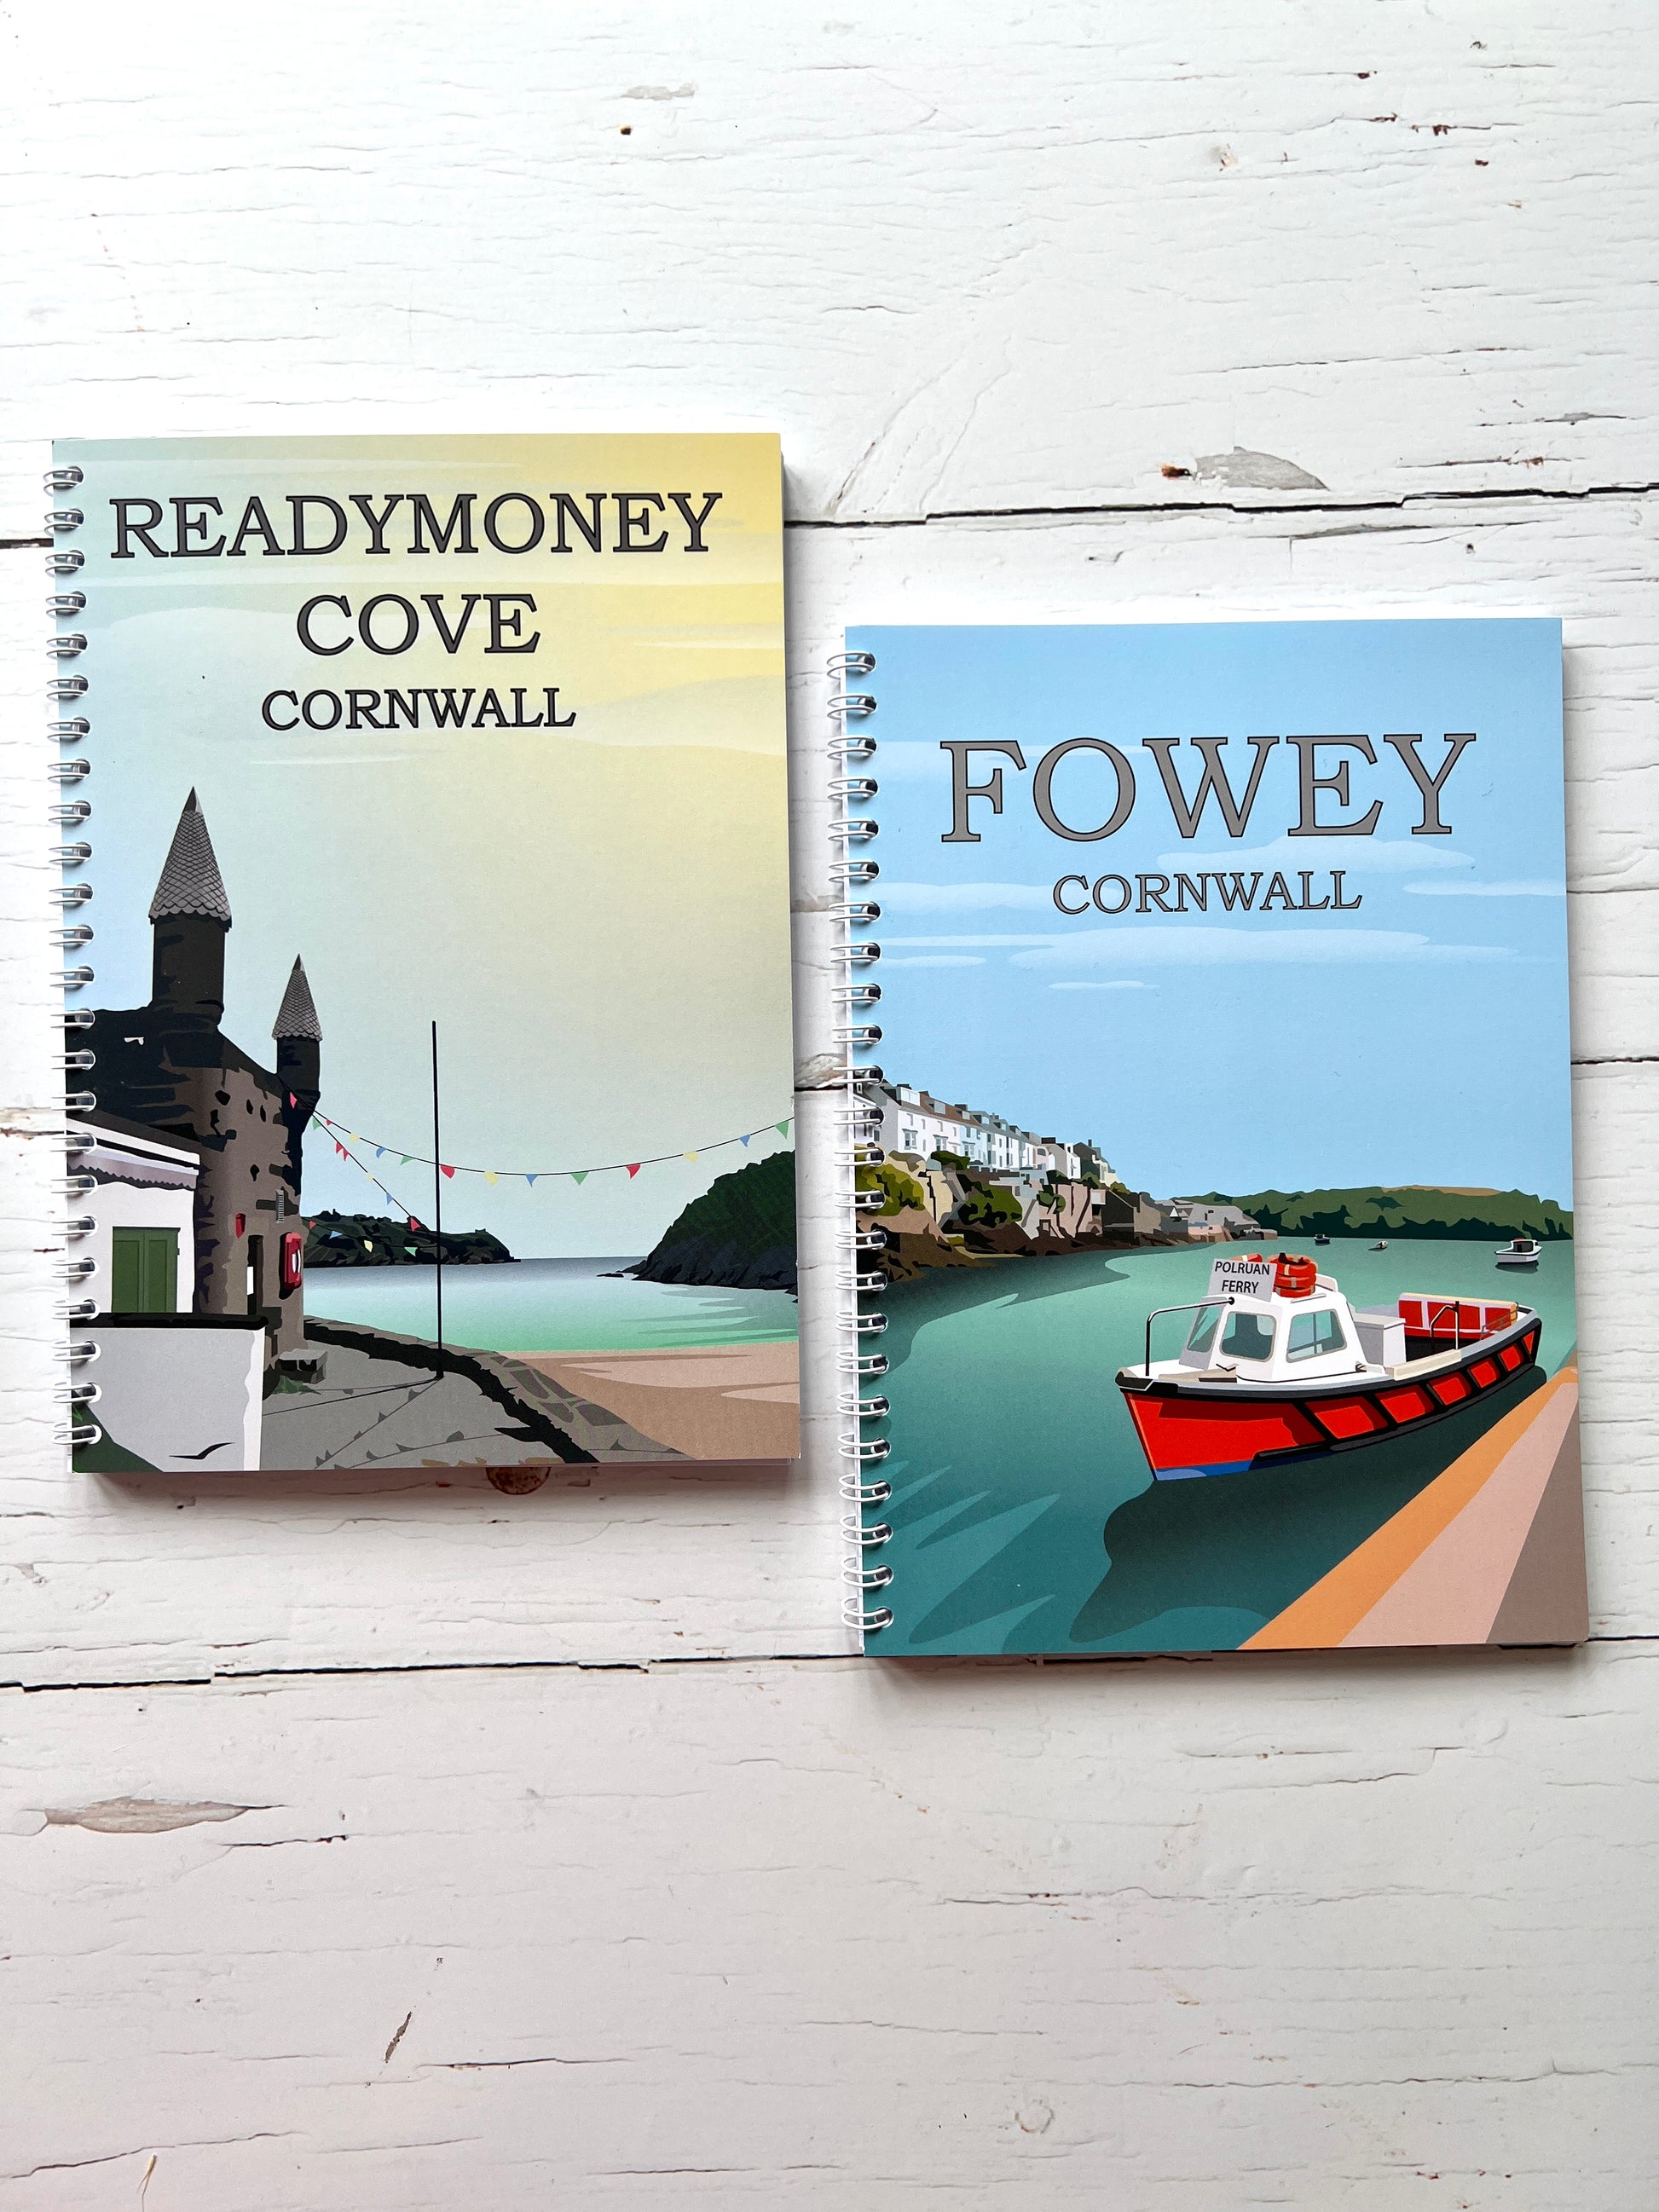 Readymoney Cove & Fowey Cornwall Digital Art A5 notebooks